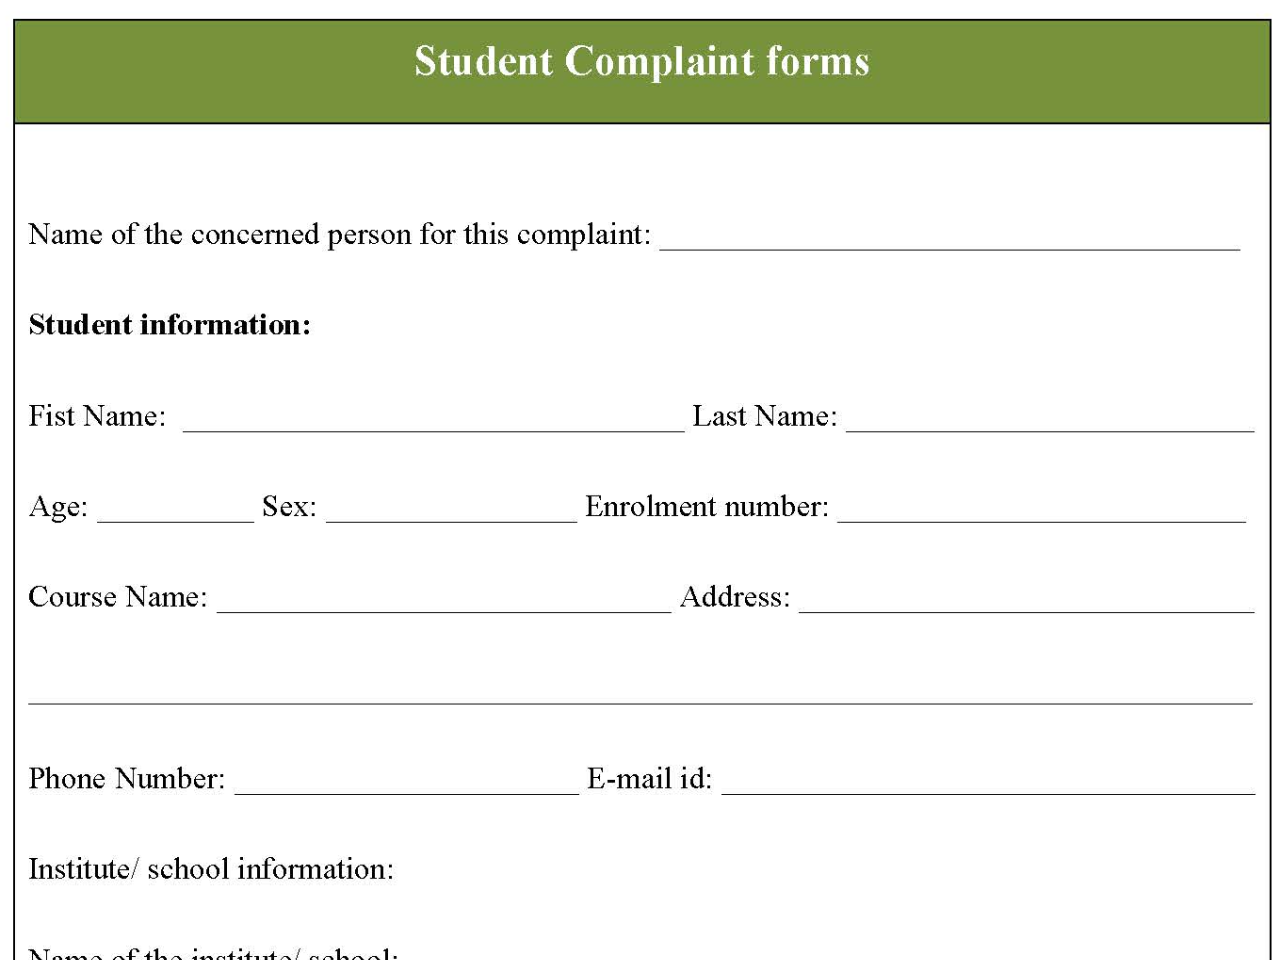 Student Complaint forms